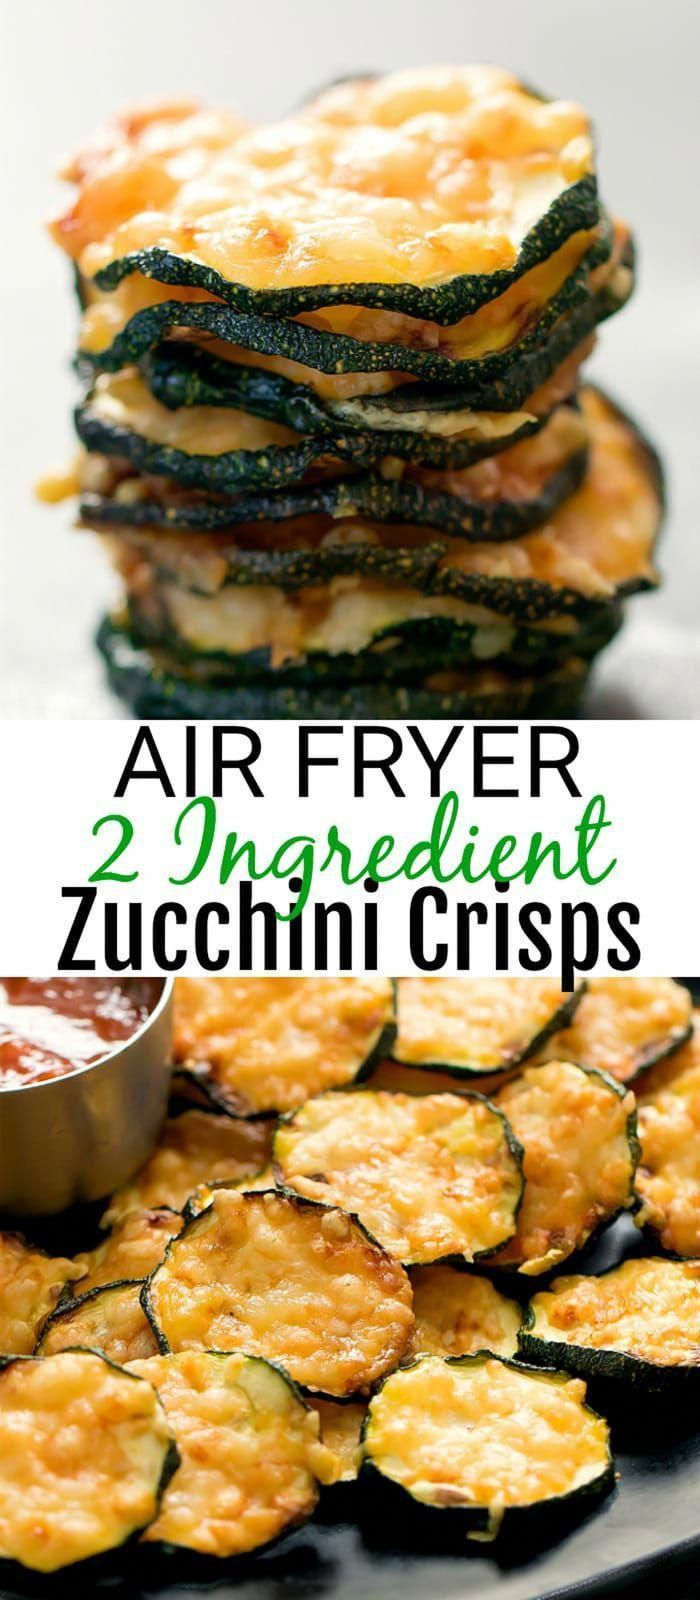 Air Fryer 2 Ingredient Parmesan Zucchini Crisps -   19 air fryer recipes easy snacks ideas